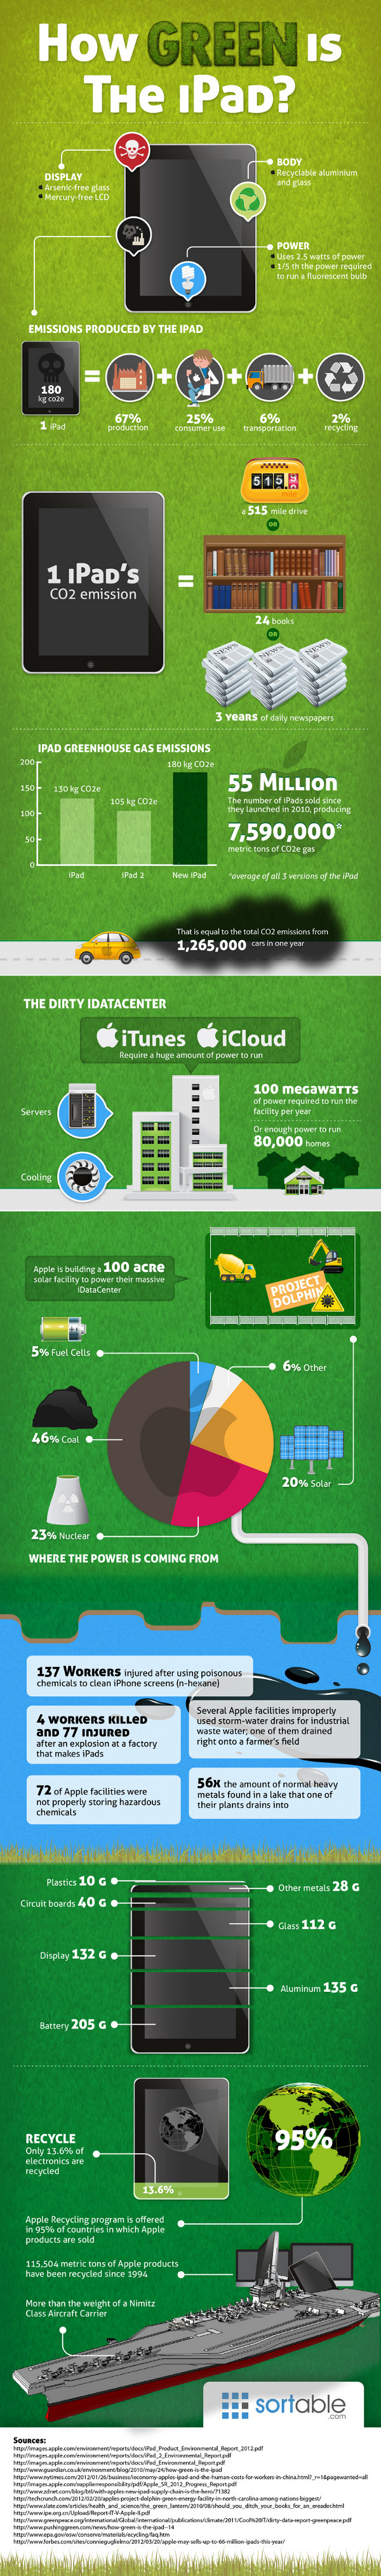 Apple Environmental infographic